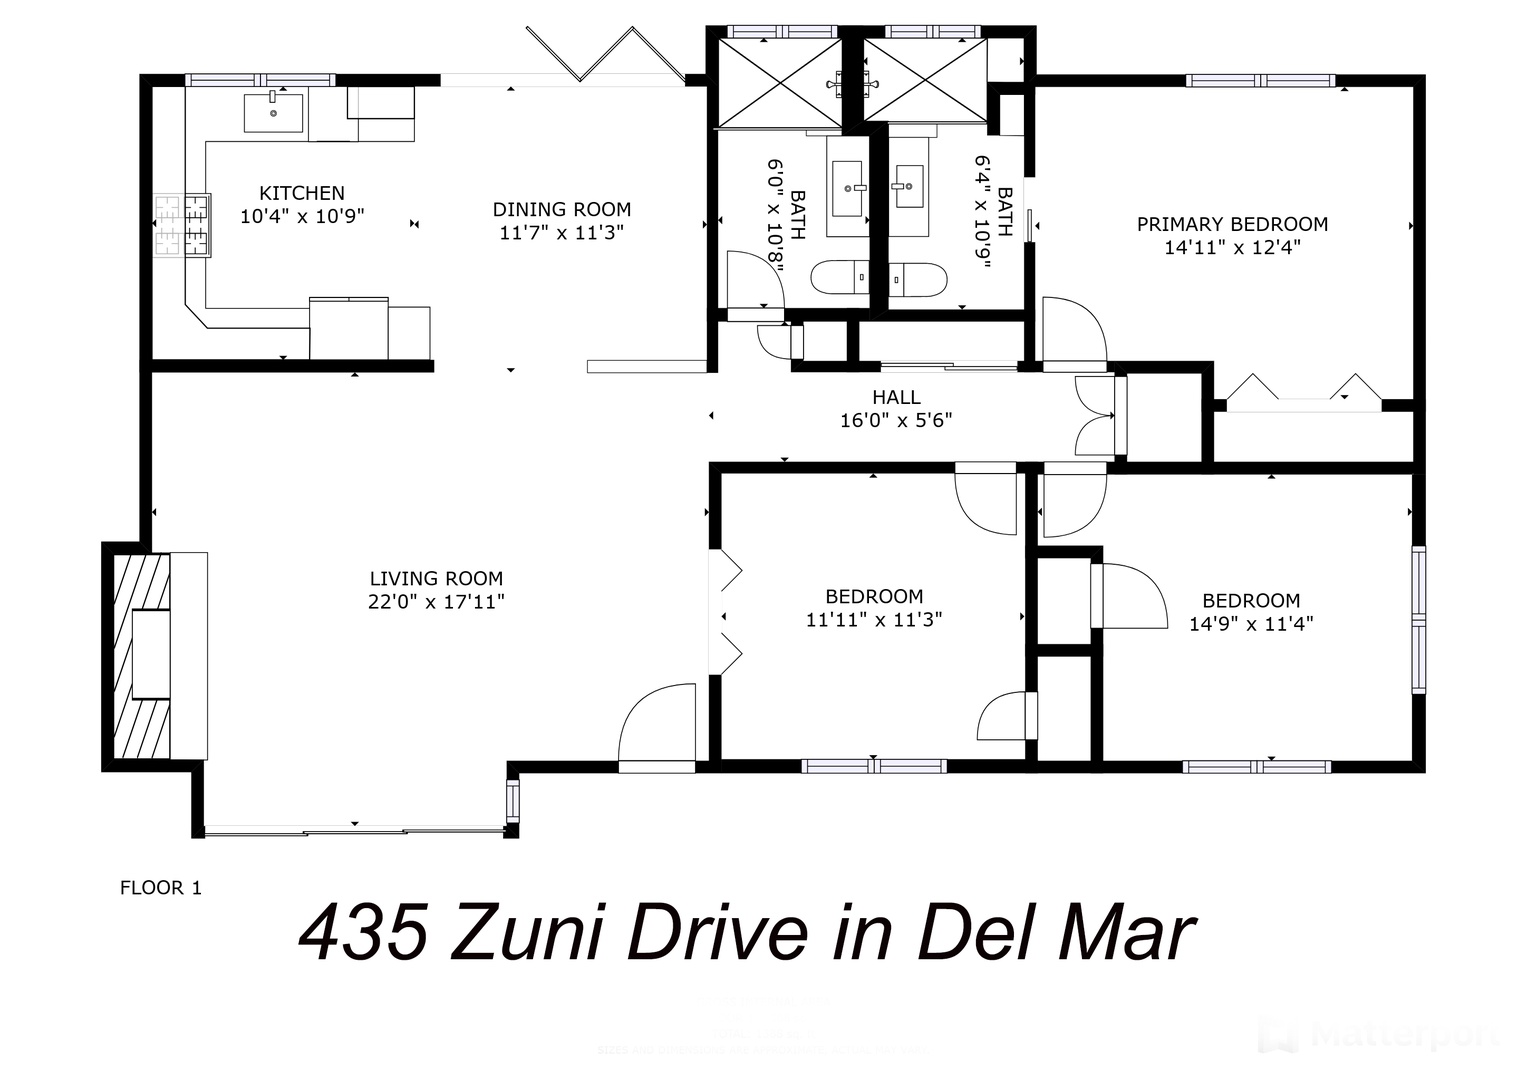 Del Mar Vacation Rentals, Del Mar Zuni Delight - Del Mar Zuni Delight floor plan